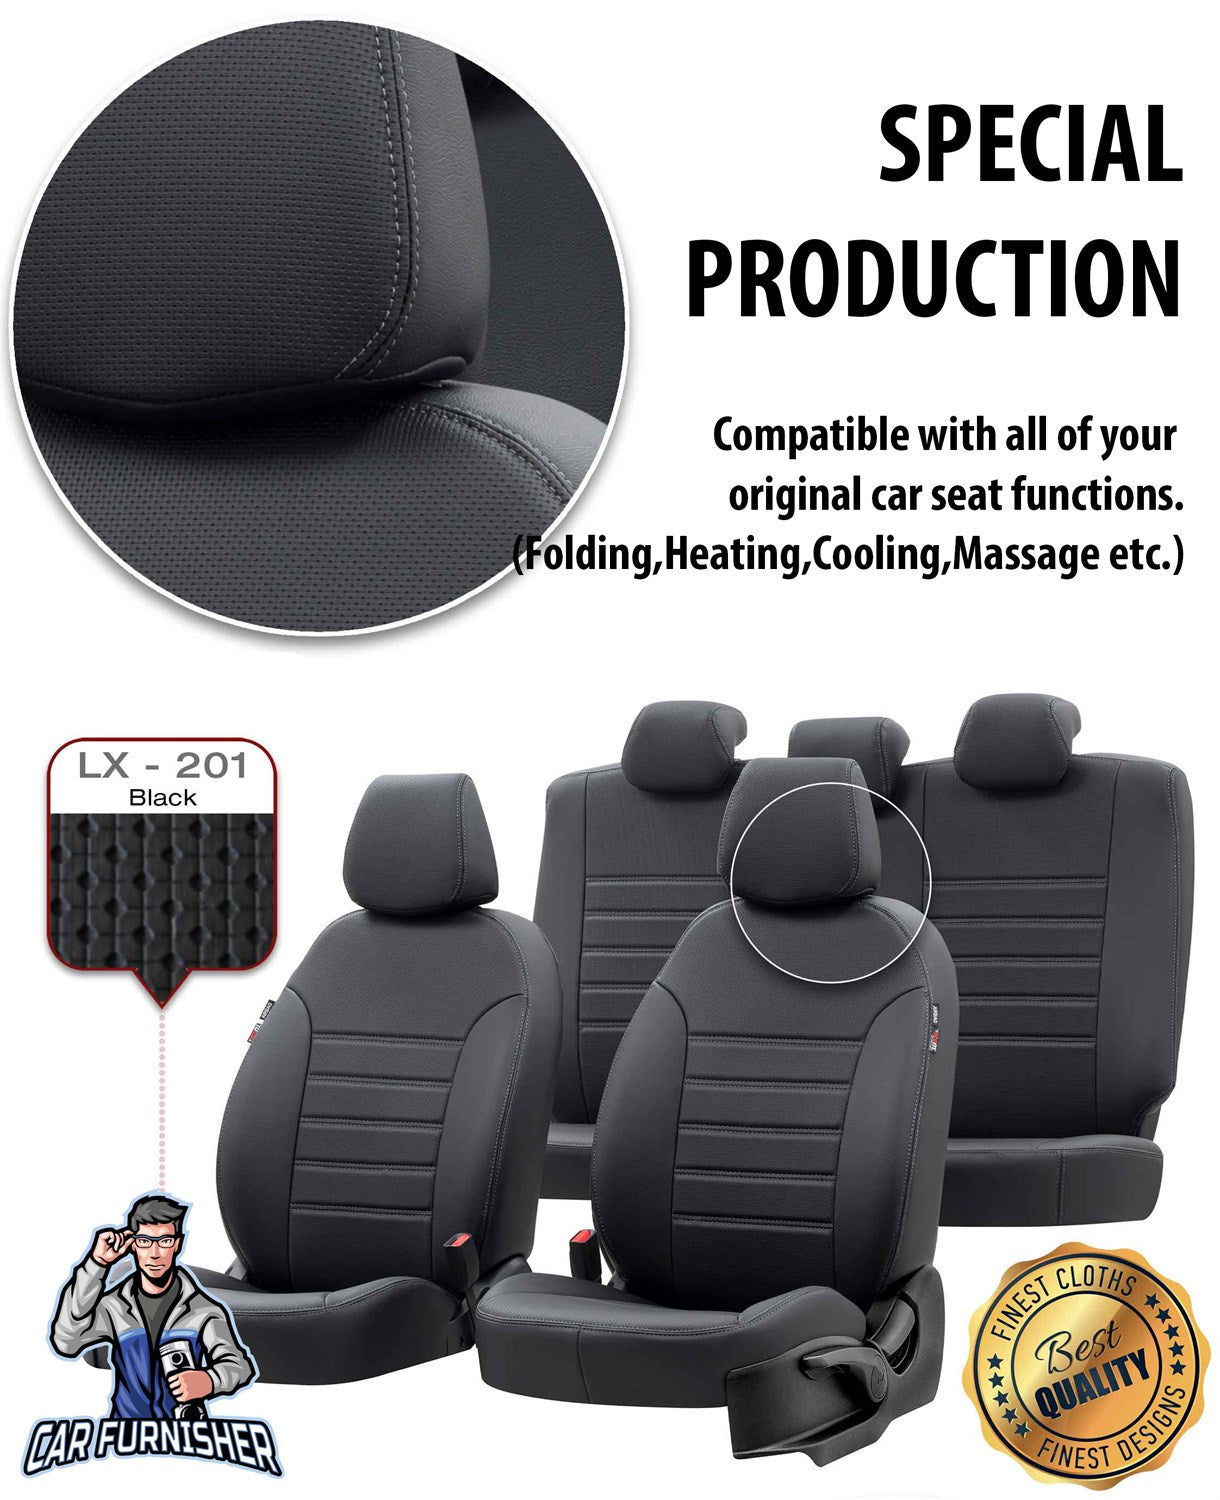 Toyota Rav4 Seat Cover New York Leather Design Beige Leather